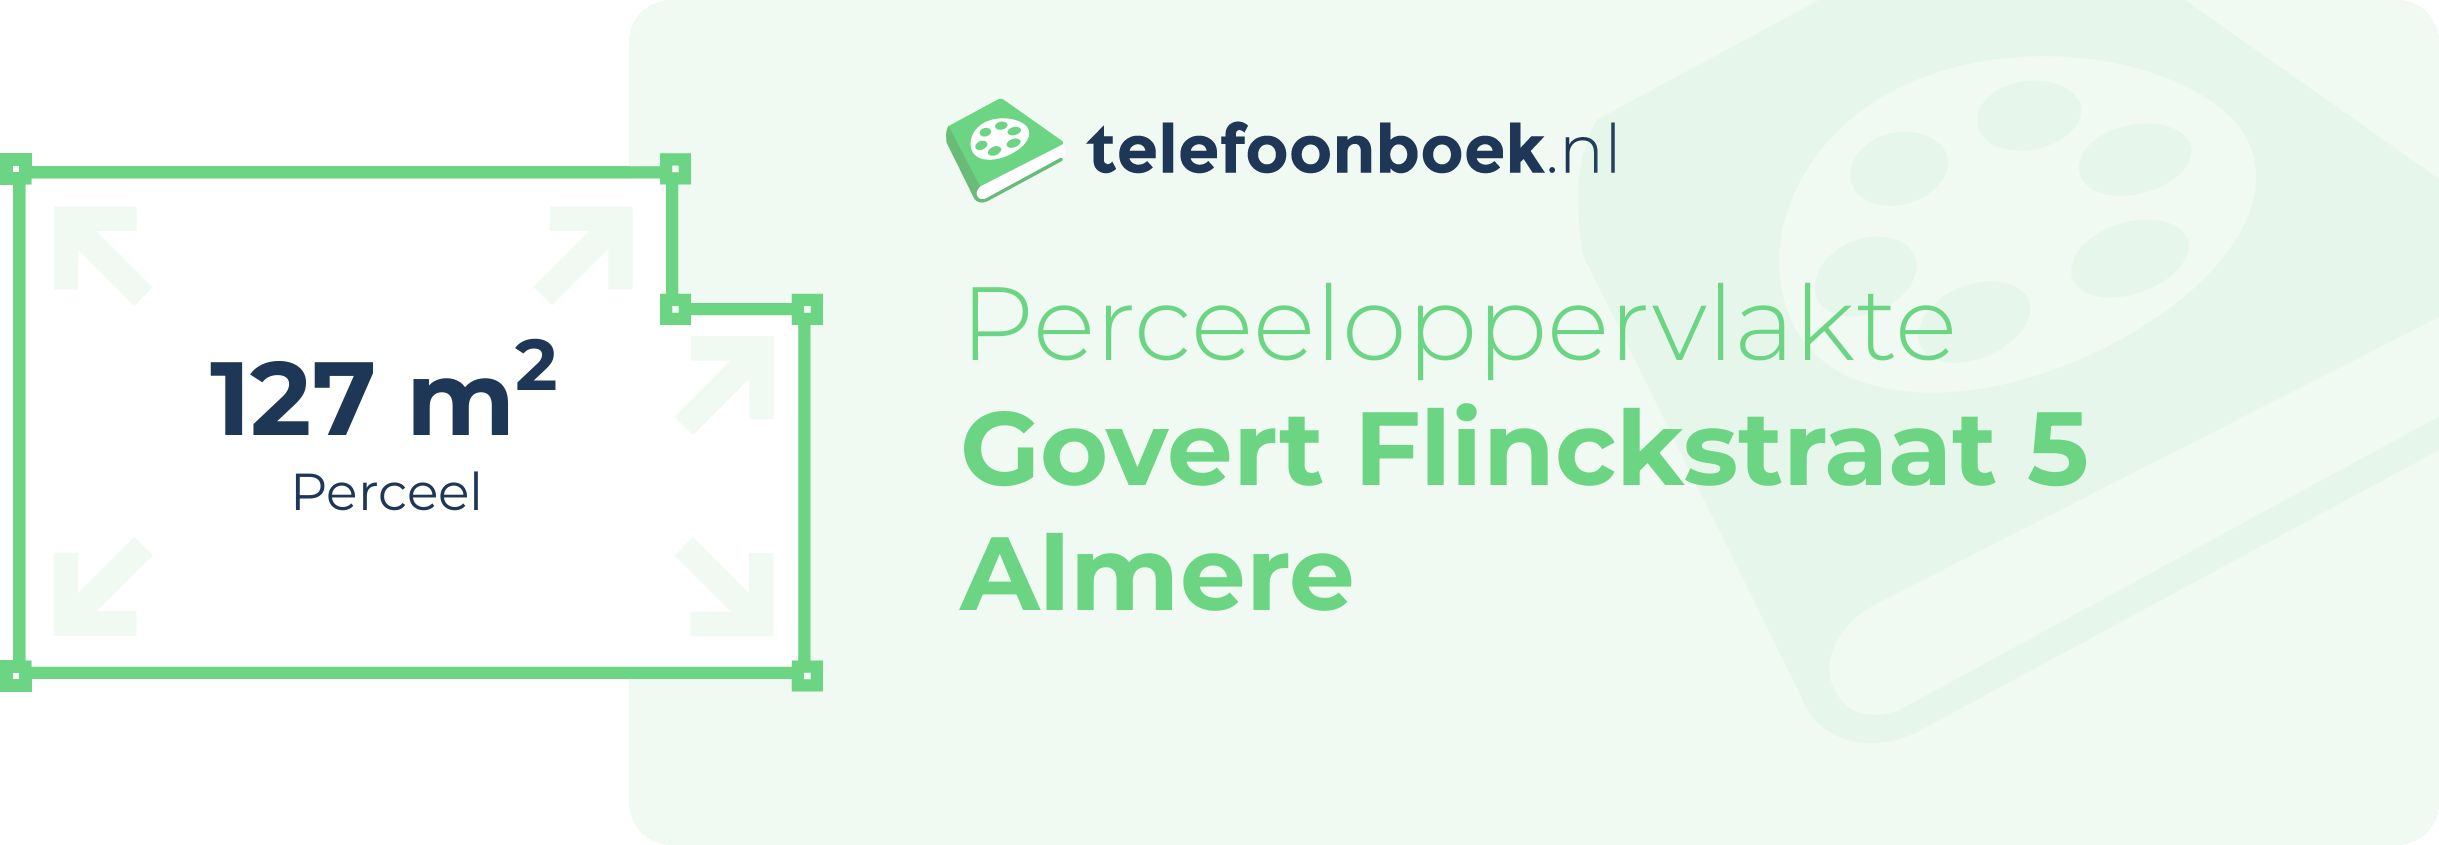 Perceeloppervlakte Govert Flinckstraat 5 Almere